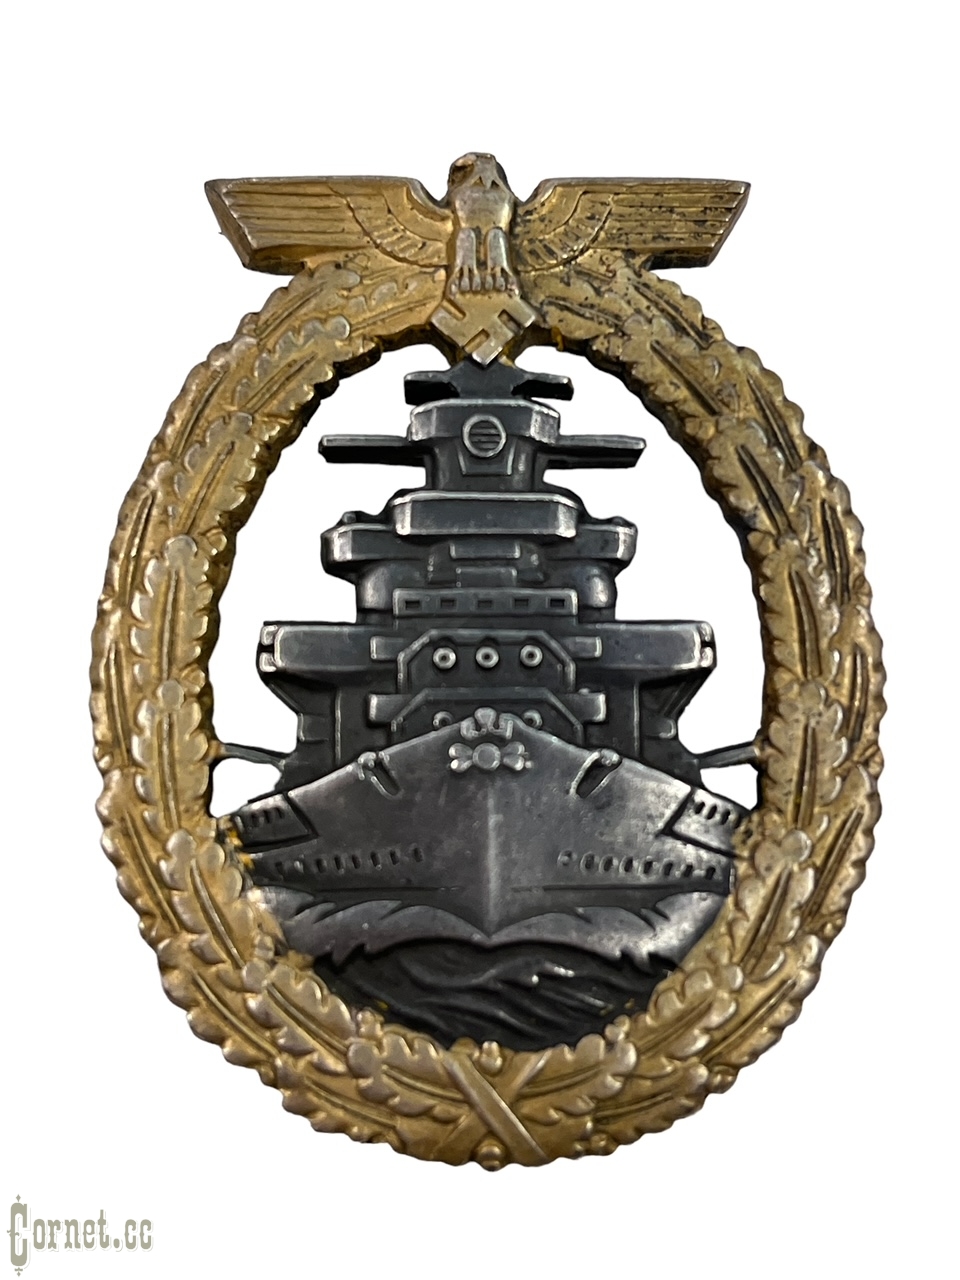 Badge "Team Member of the Cruiser"